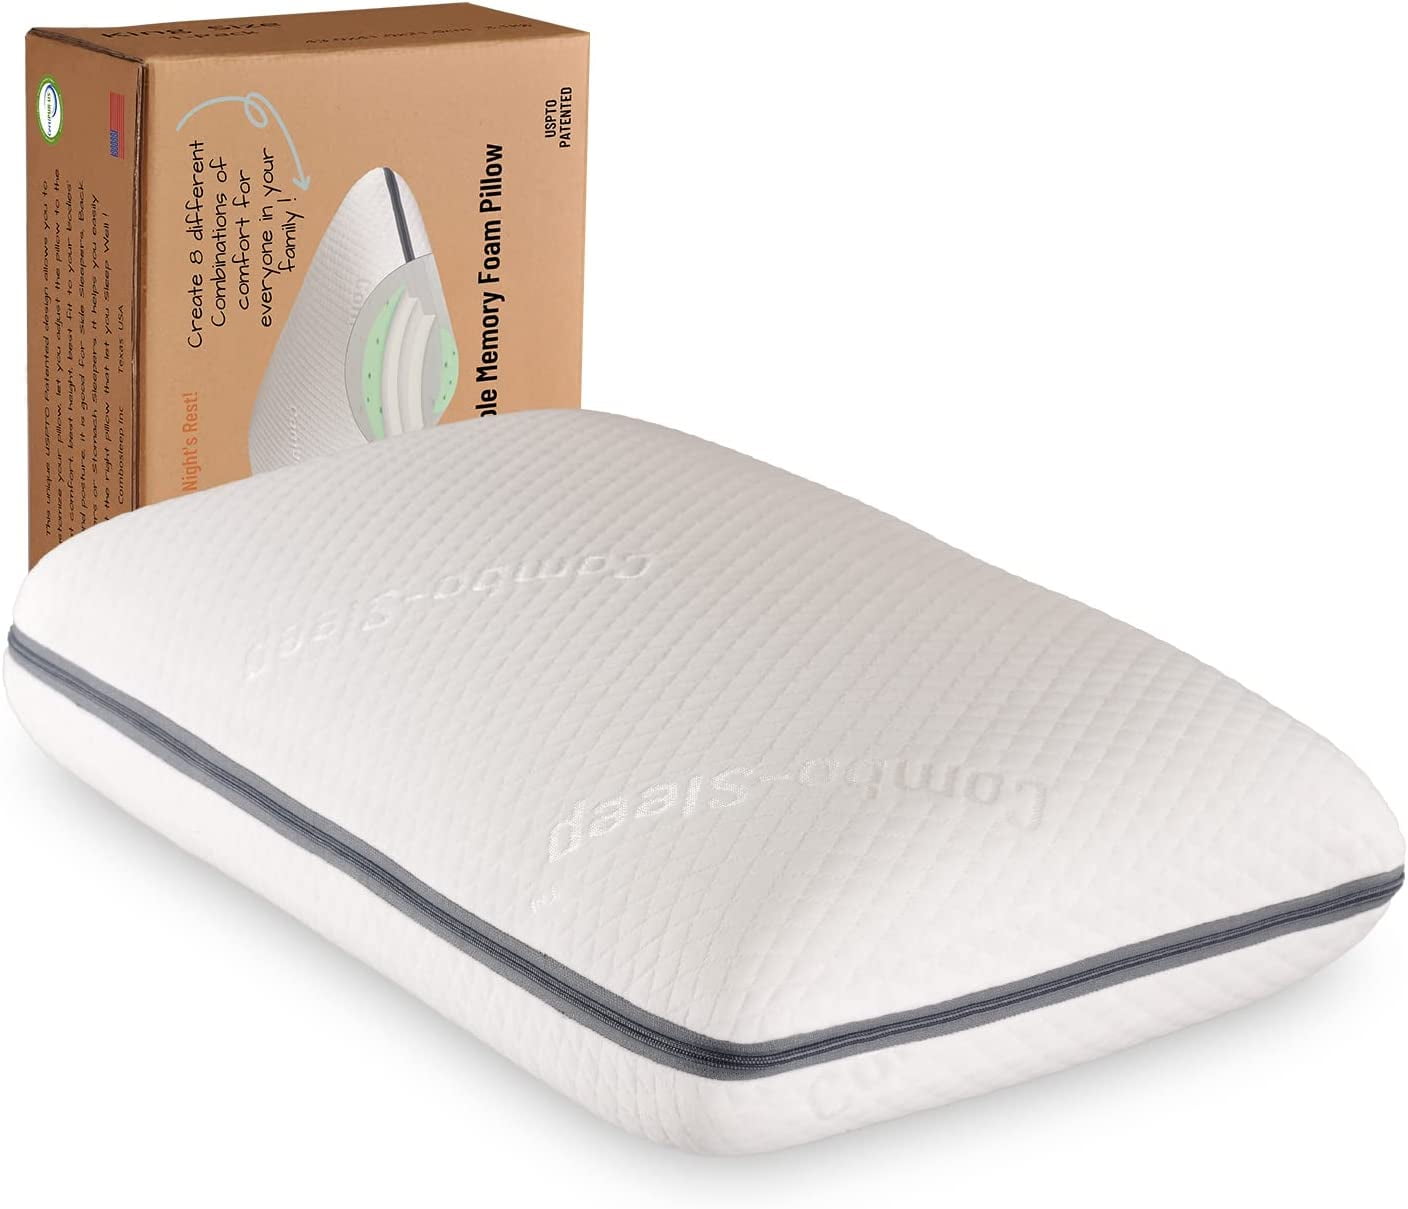 Welltop Memory Foam Pillow for Neck Pain Relief, Ergonomic